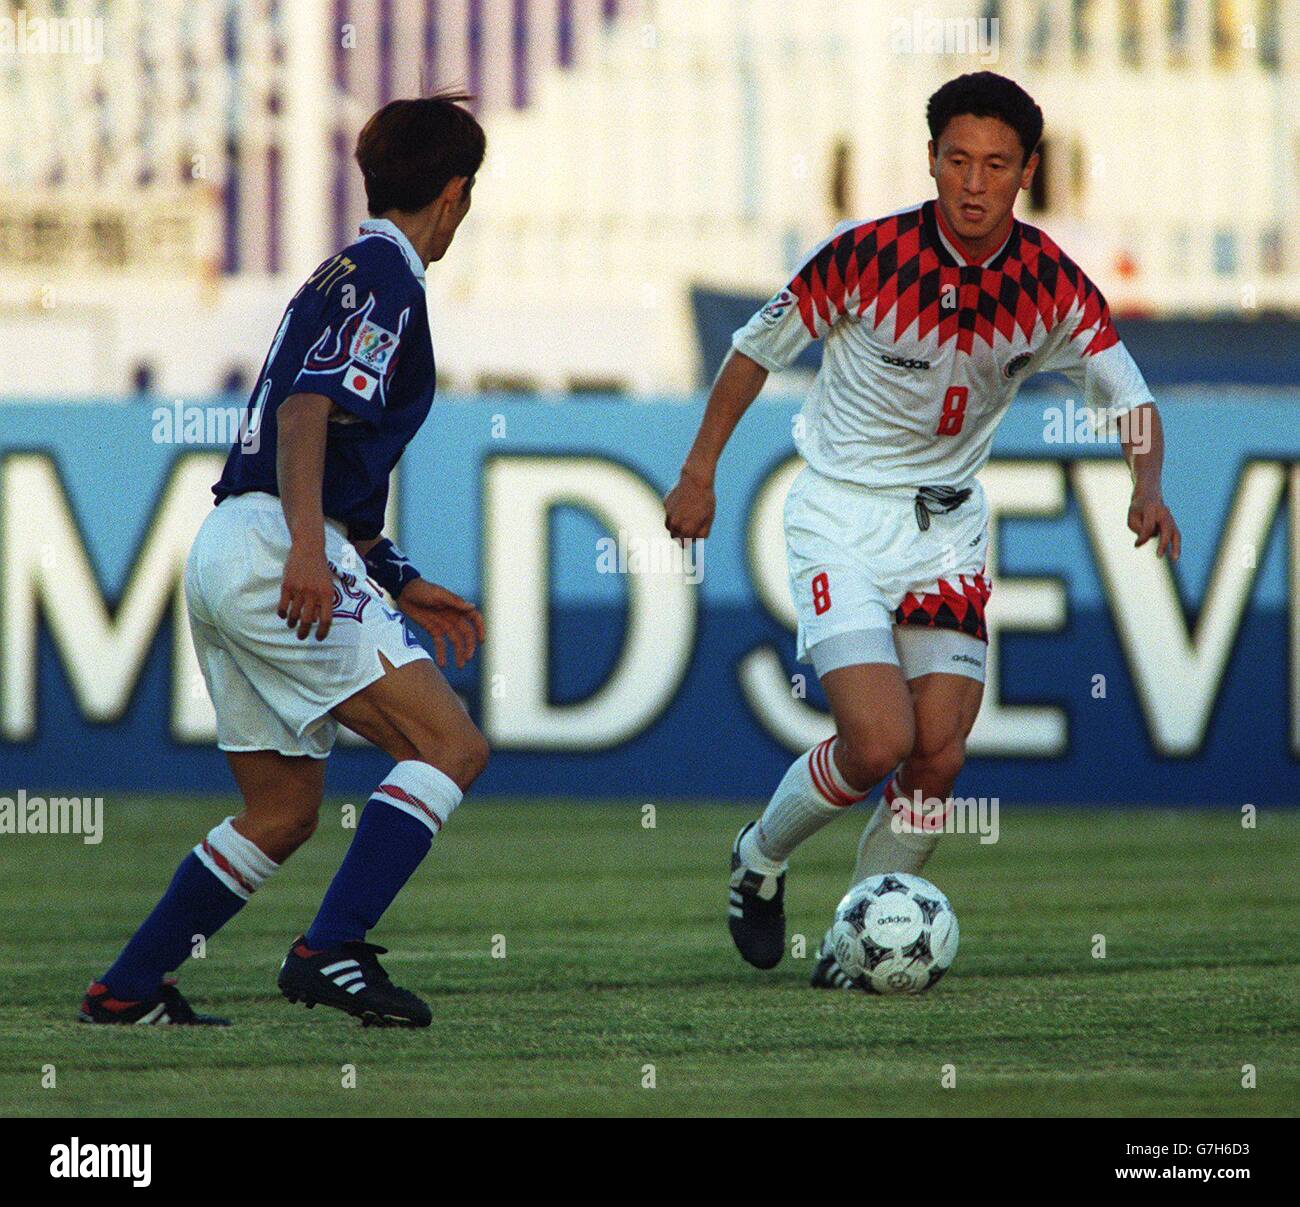 International Soccer ... ASIA'96 ... Japan v China Stock Photo - Alamy